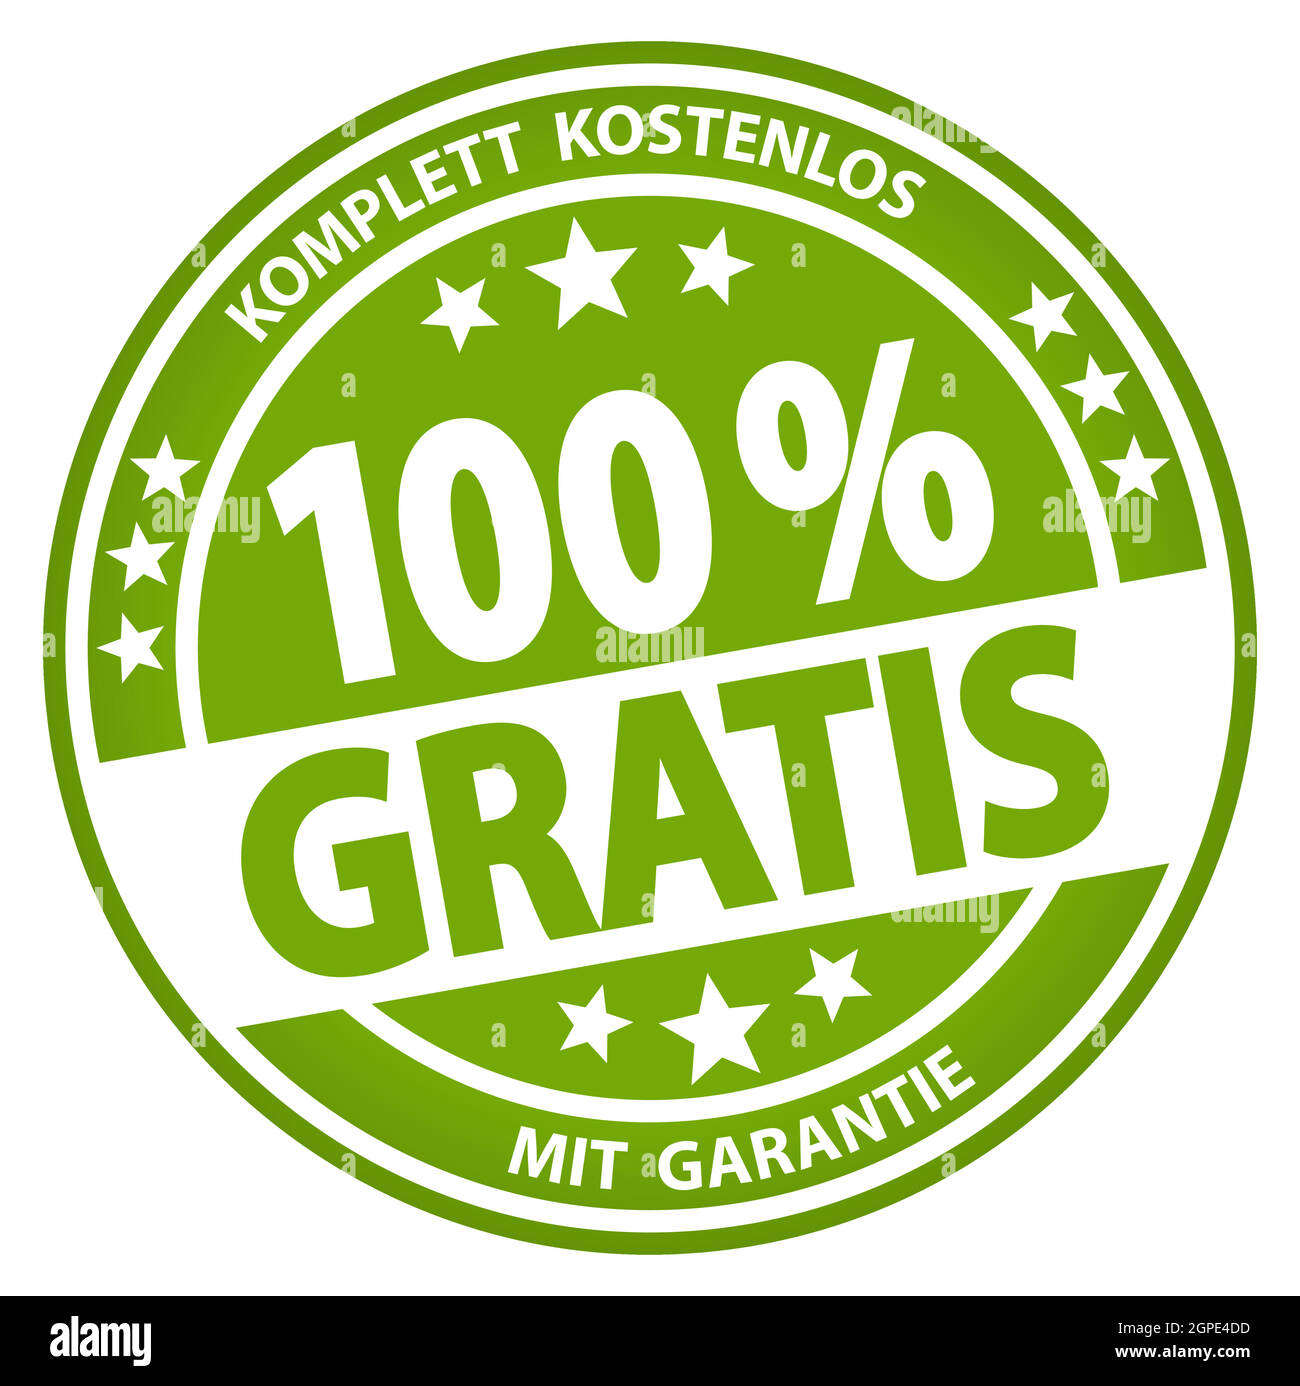 round business button - 100% gratis (german) Stock Vector